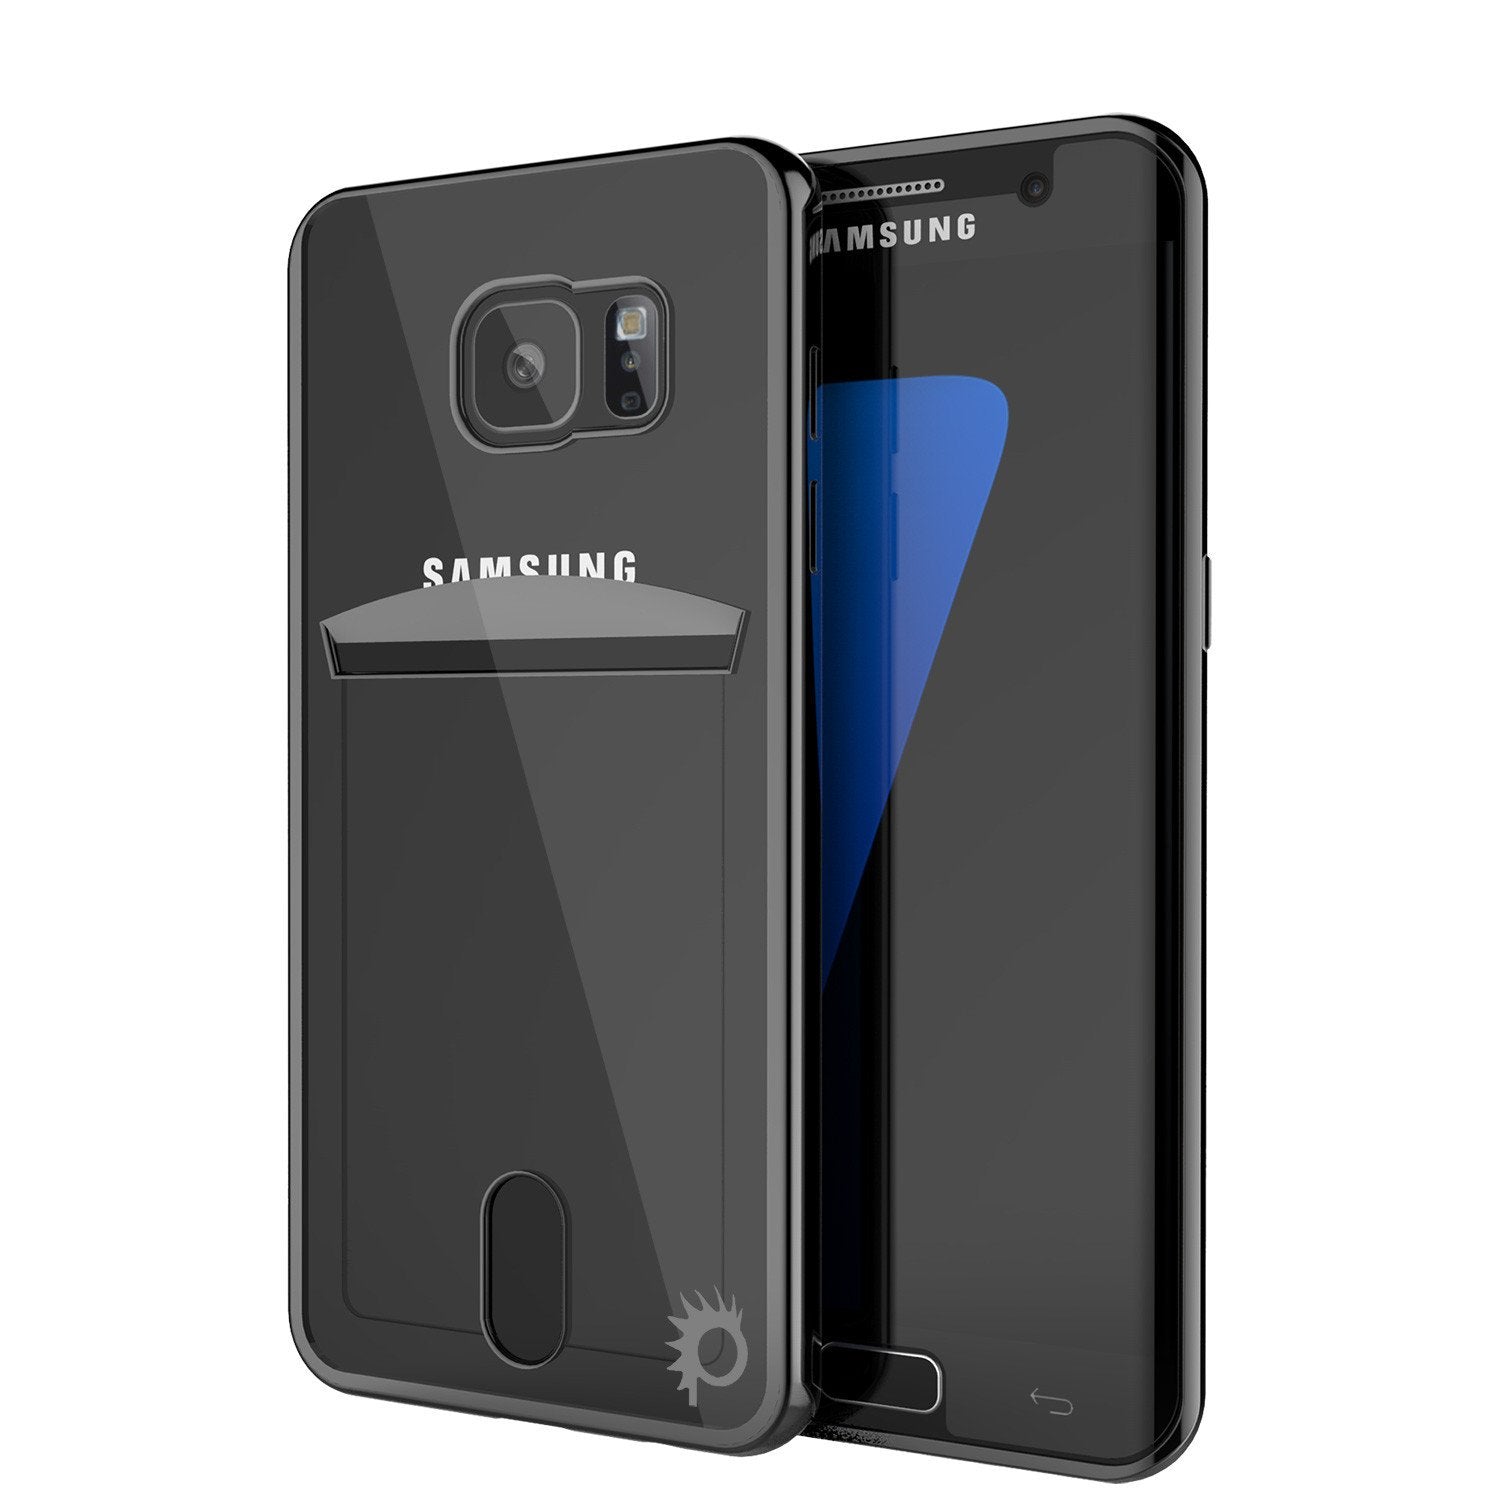 Galaxy S7 Case, PUNKCASE® LUCID Black Series | Card Slot